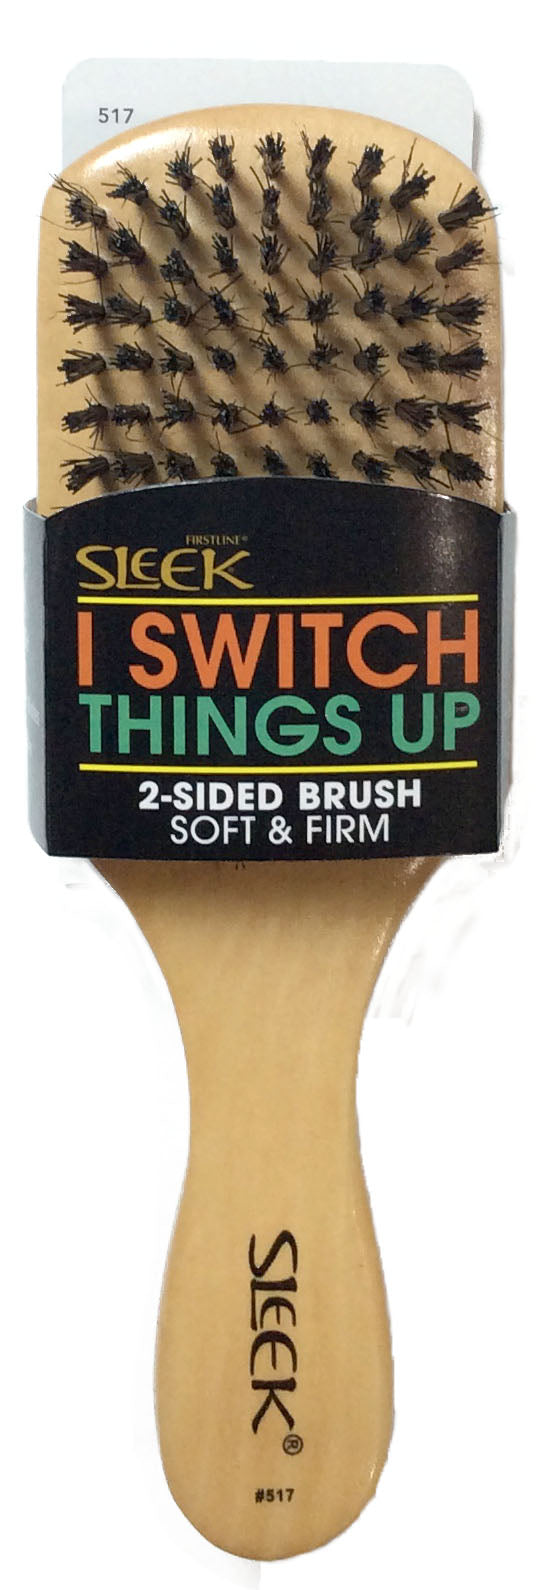 Sleek® 2-Sided Brush in brand packaging. 